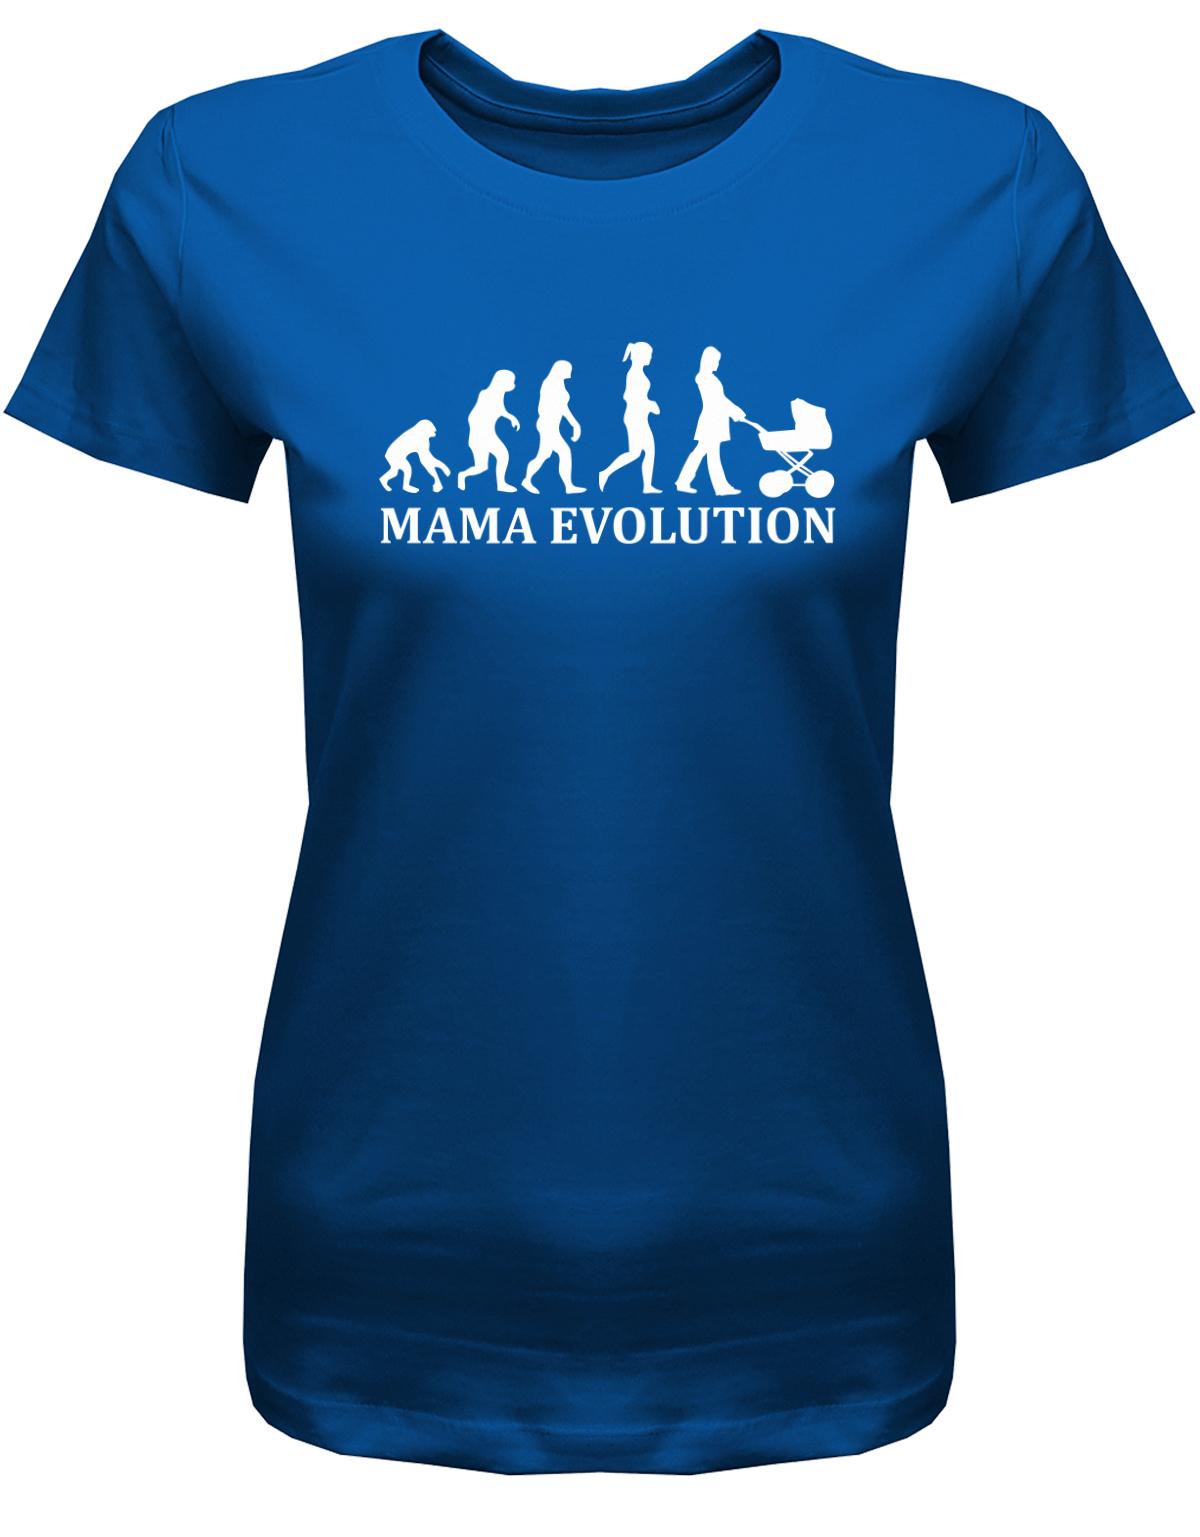 Mama-Evolution-Damen-Shirt-royalblau